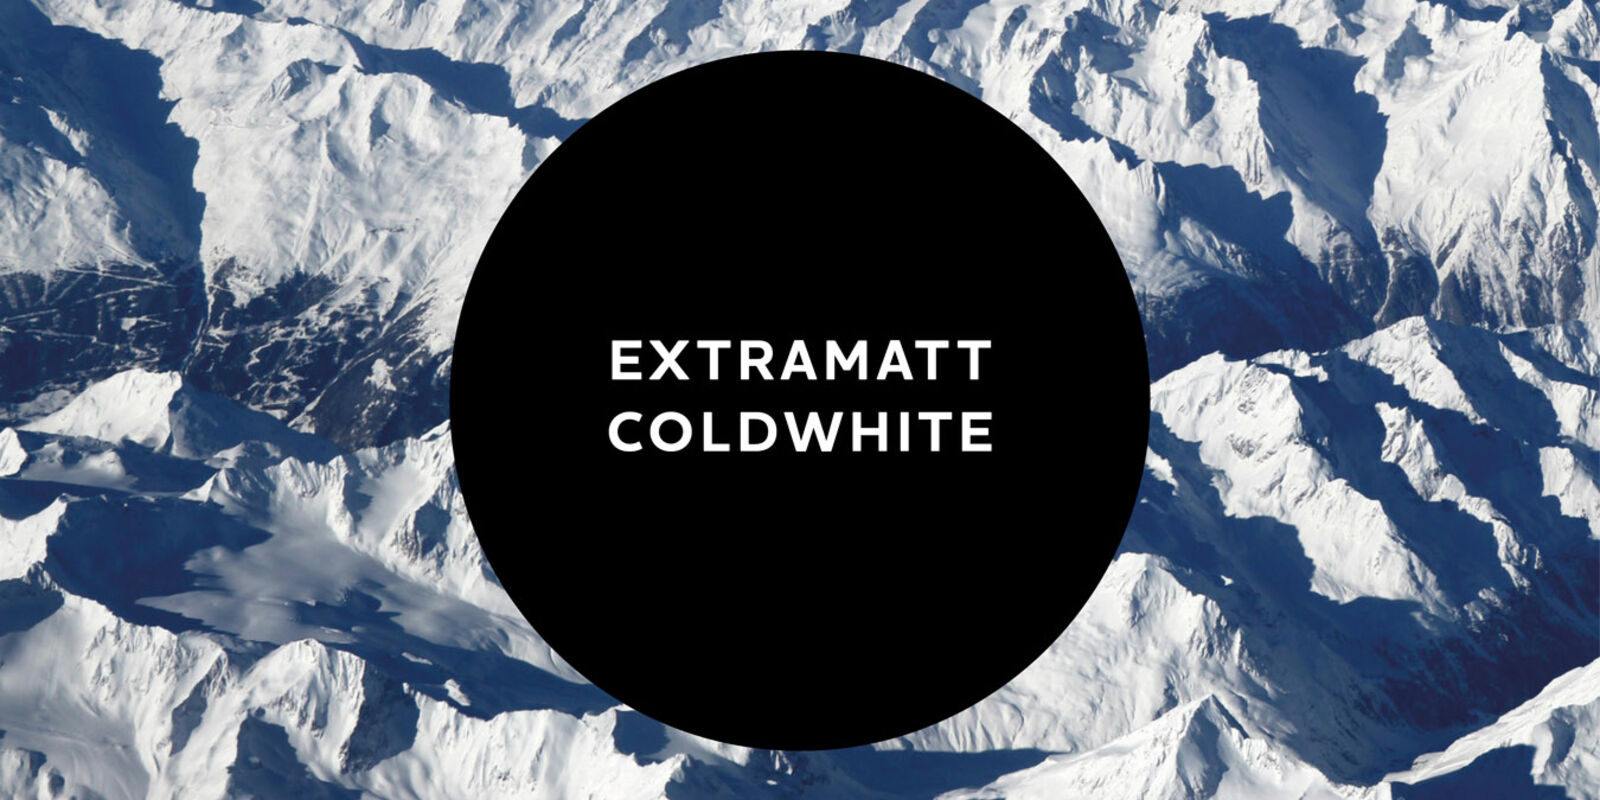 "Extramatt Coldwhite Visual"